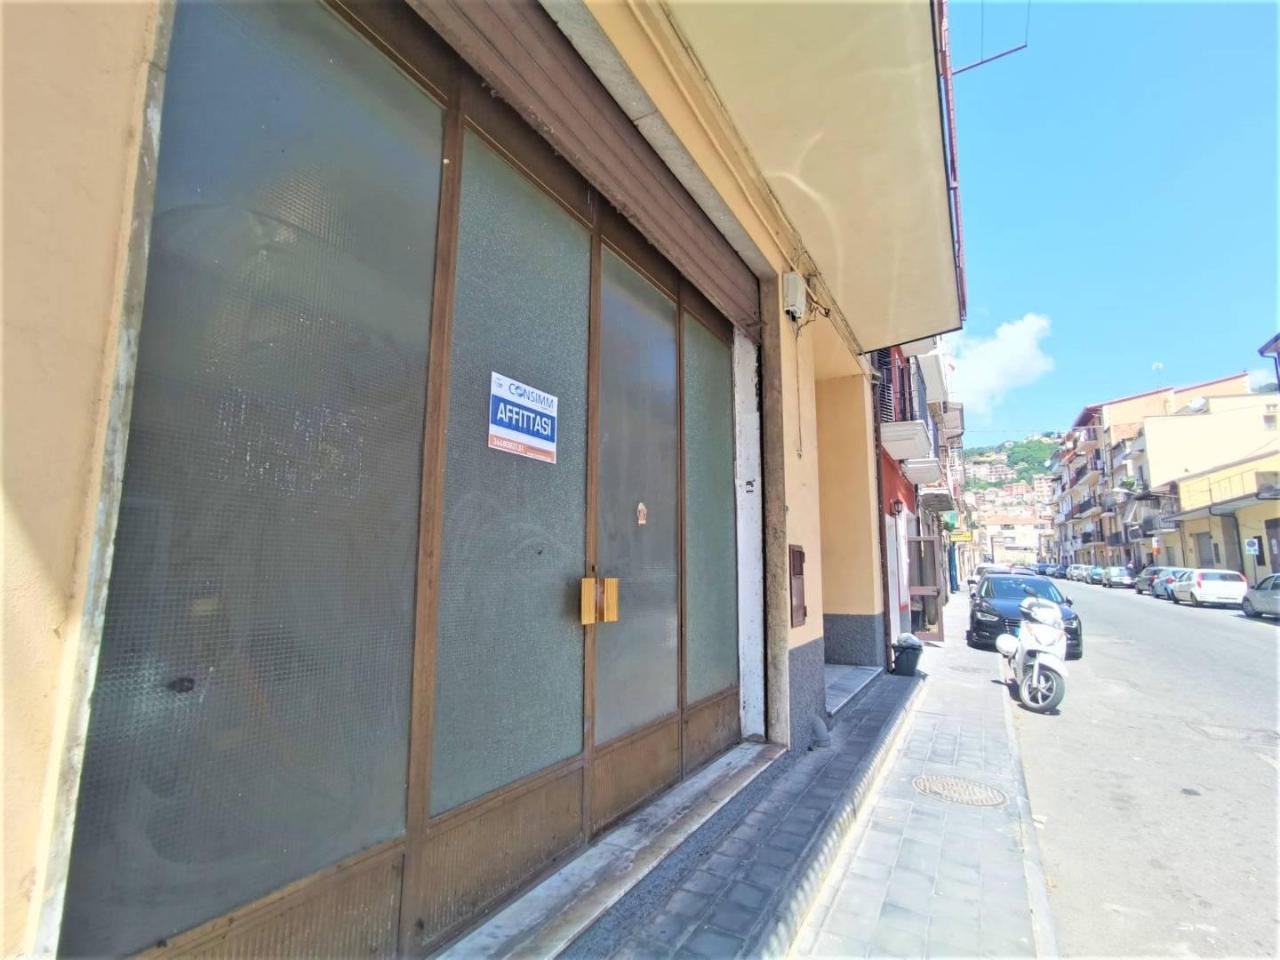 Locale commerciale in affitto a Lamezia Terme